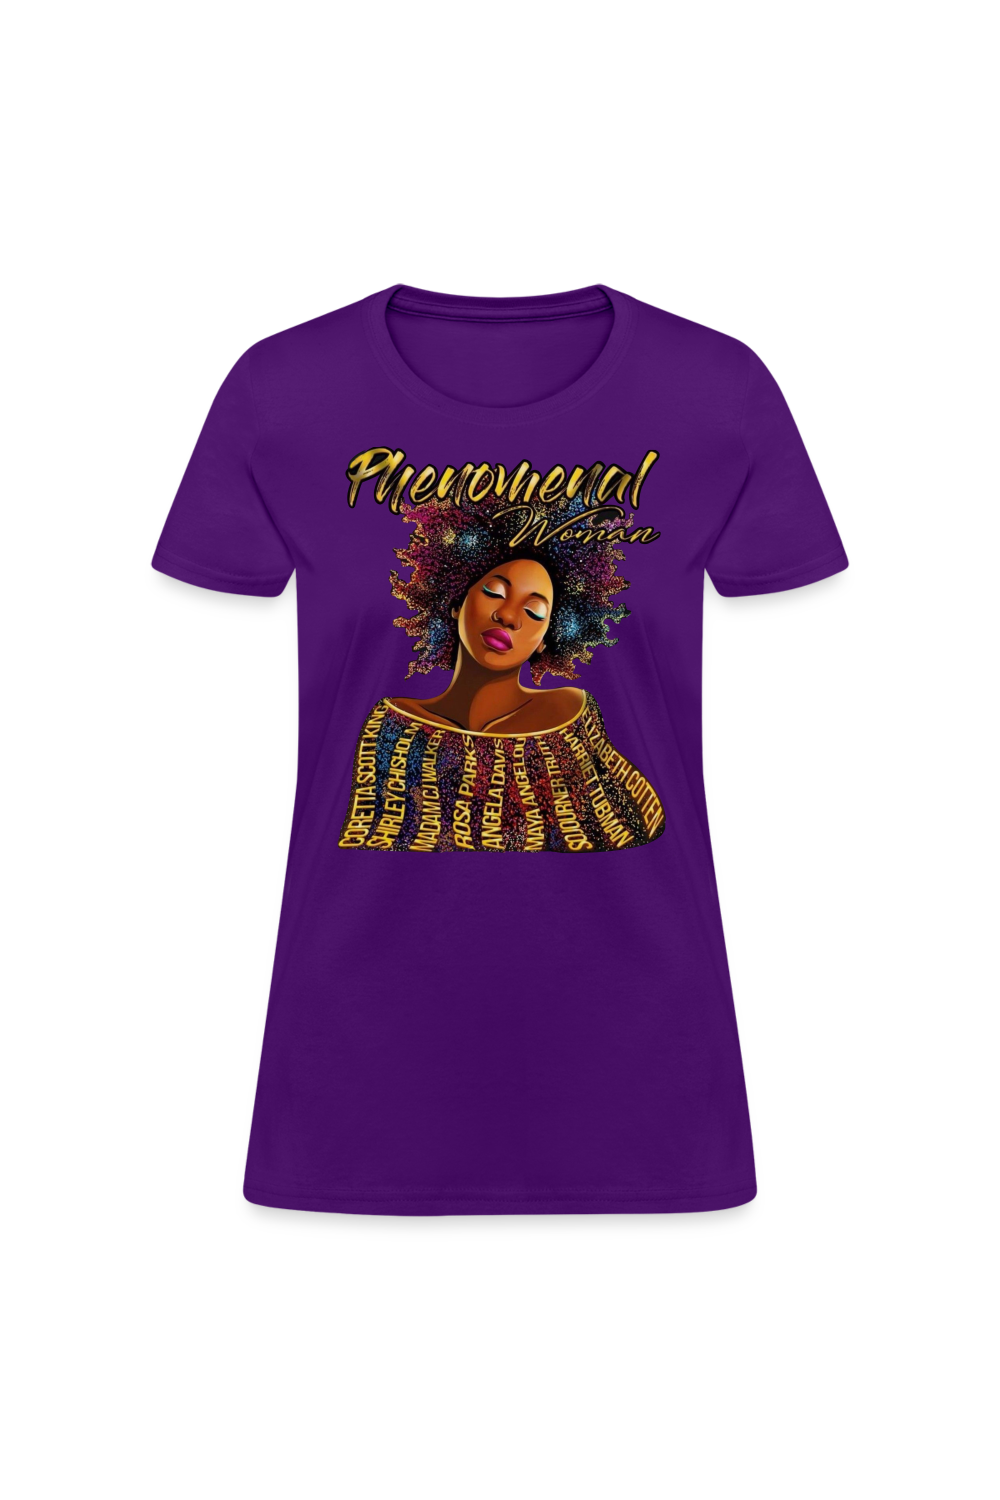 African American Women's Phenomenal Woman Short Sleeve T-Shirt - purple